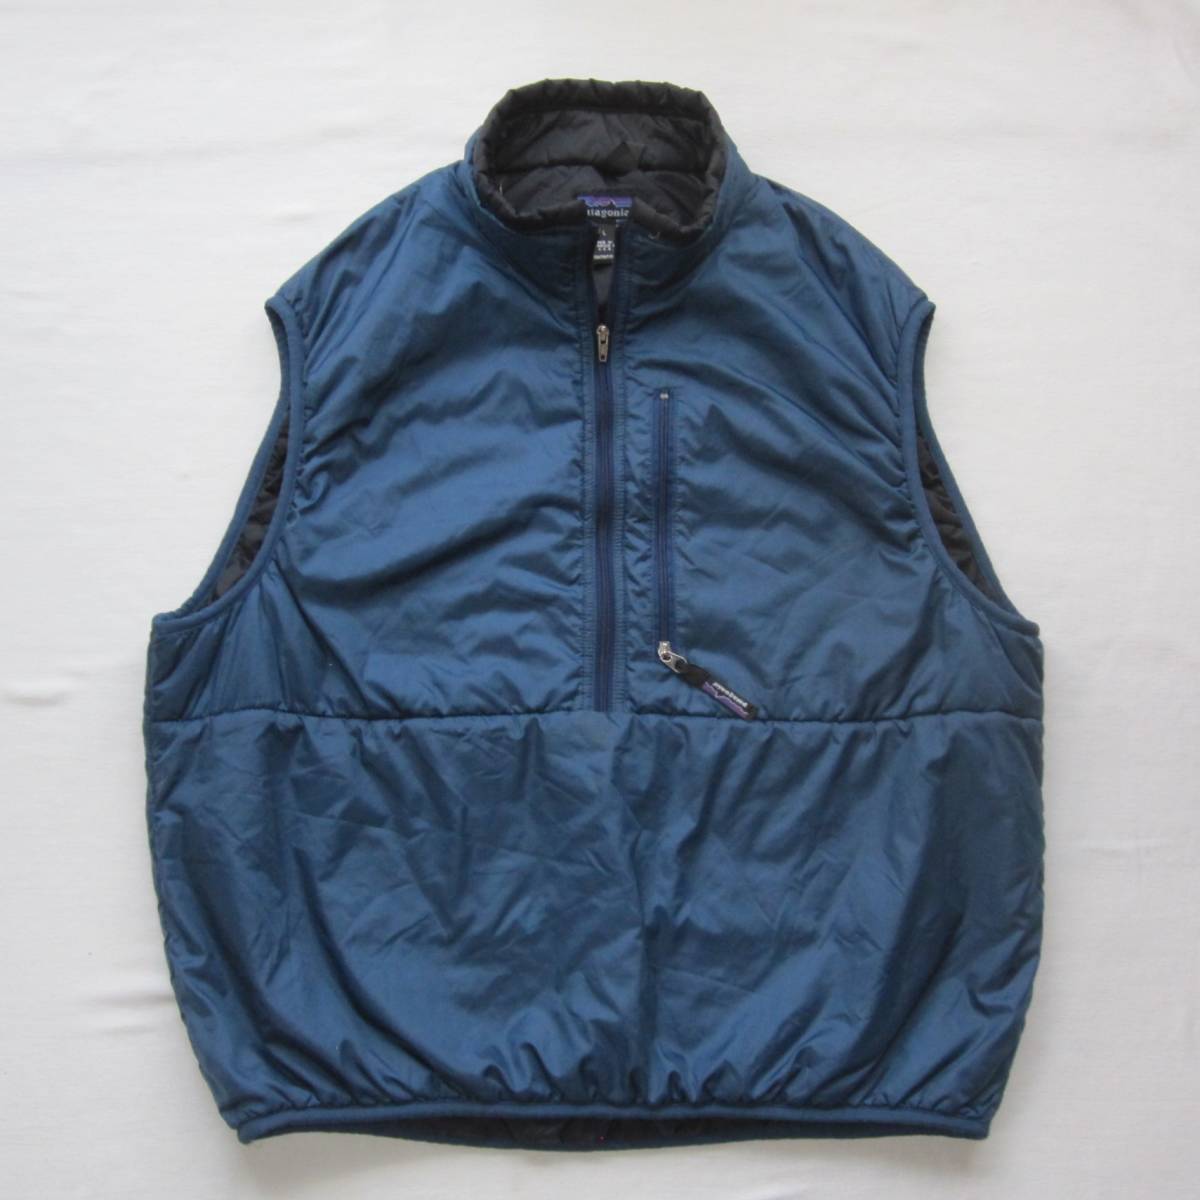 ☆ Dead Patagonia Puff Ball Vest (L) 1999 / Patagonia puffball / 90S / Vintage / Mars / Vintage Jacket